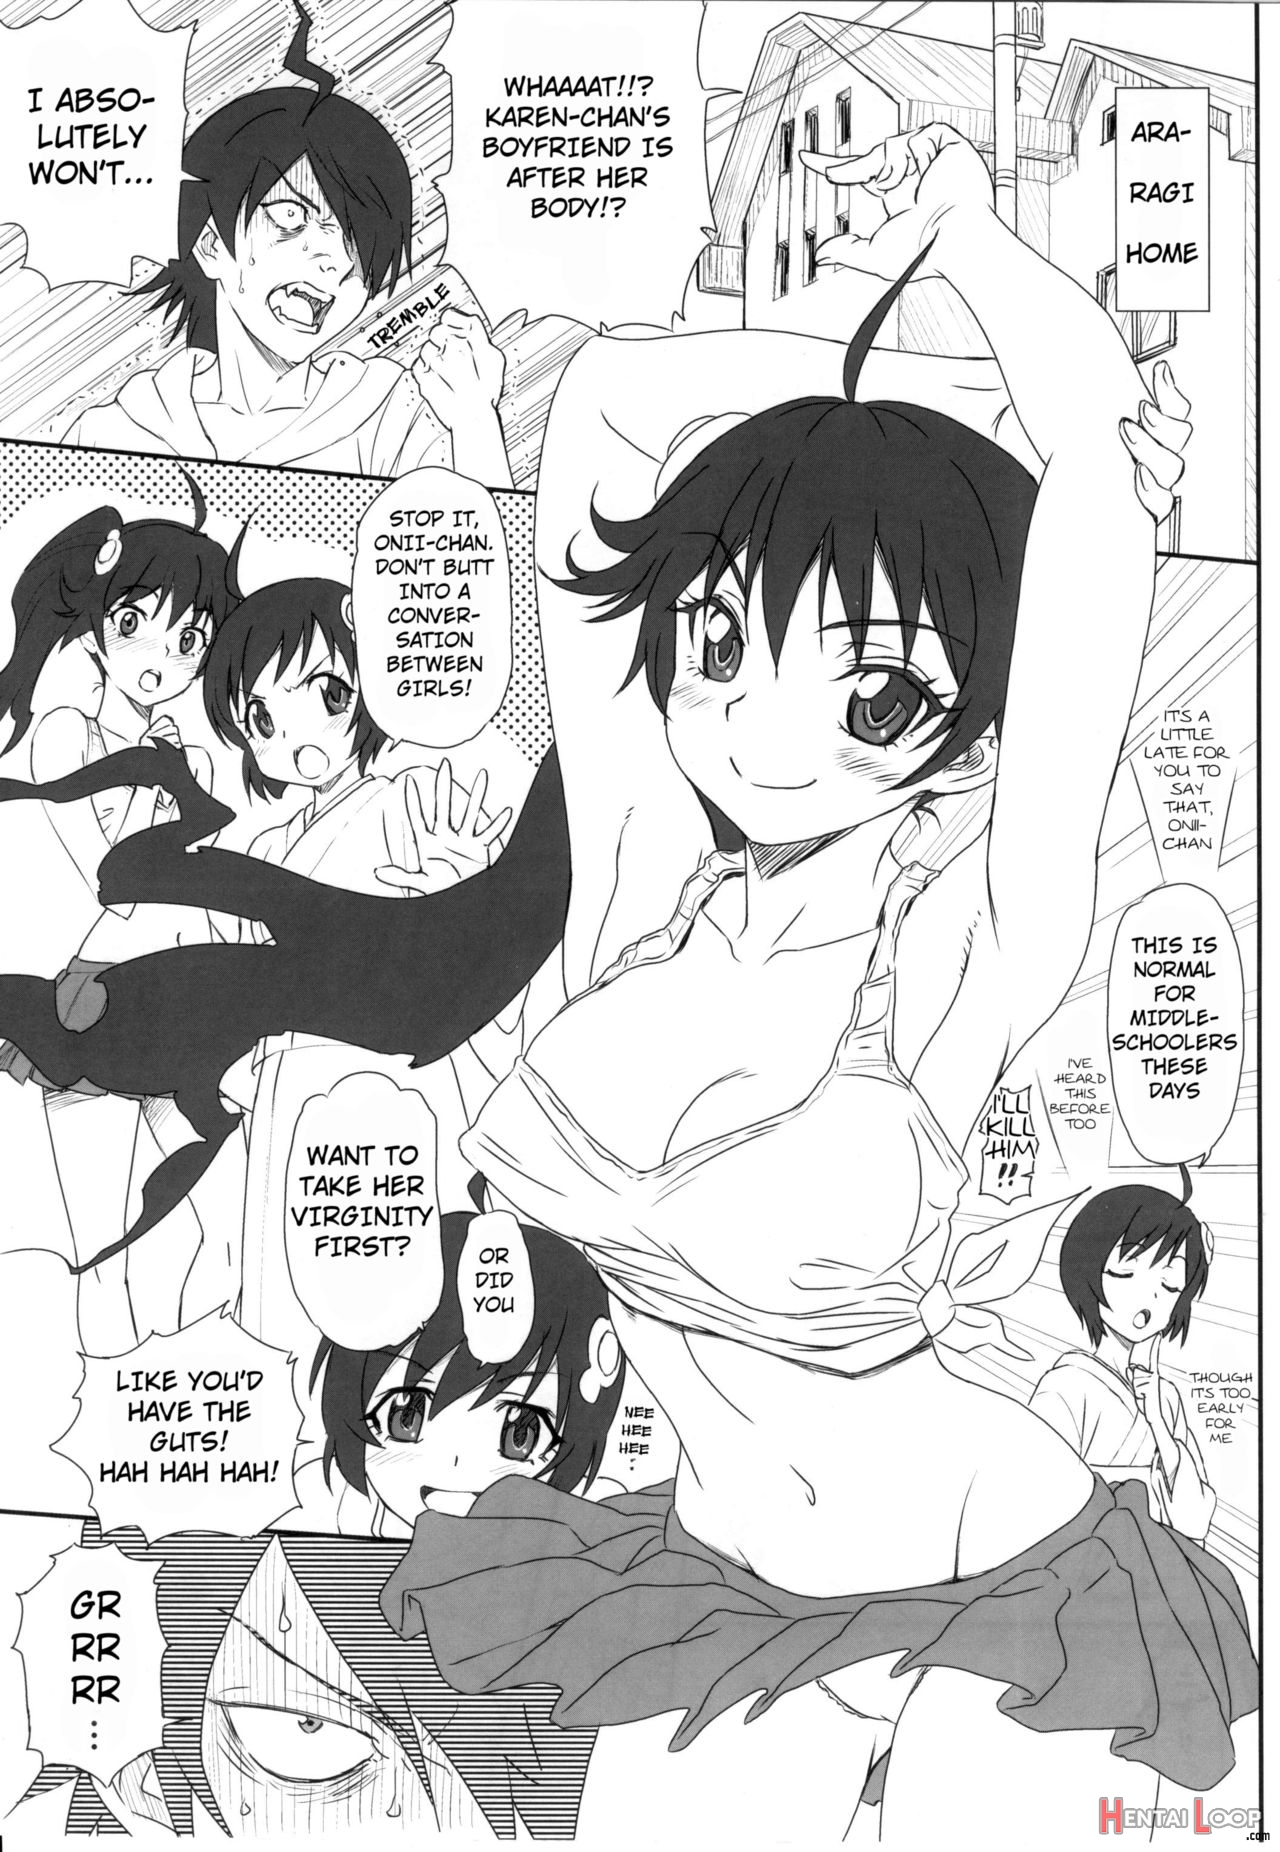 I Won't Let You Take Karen-chan's First Time! page 3